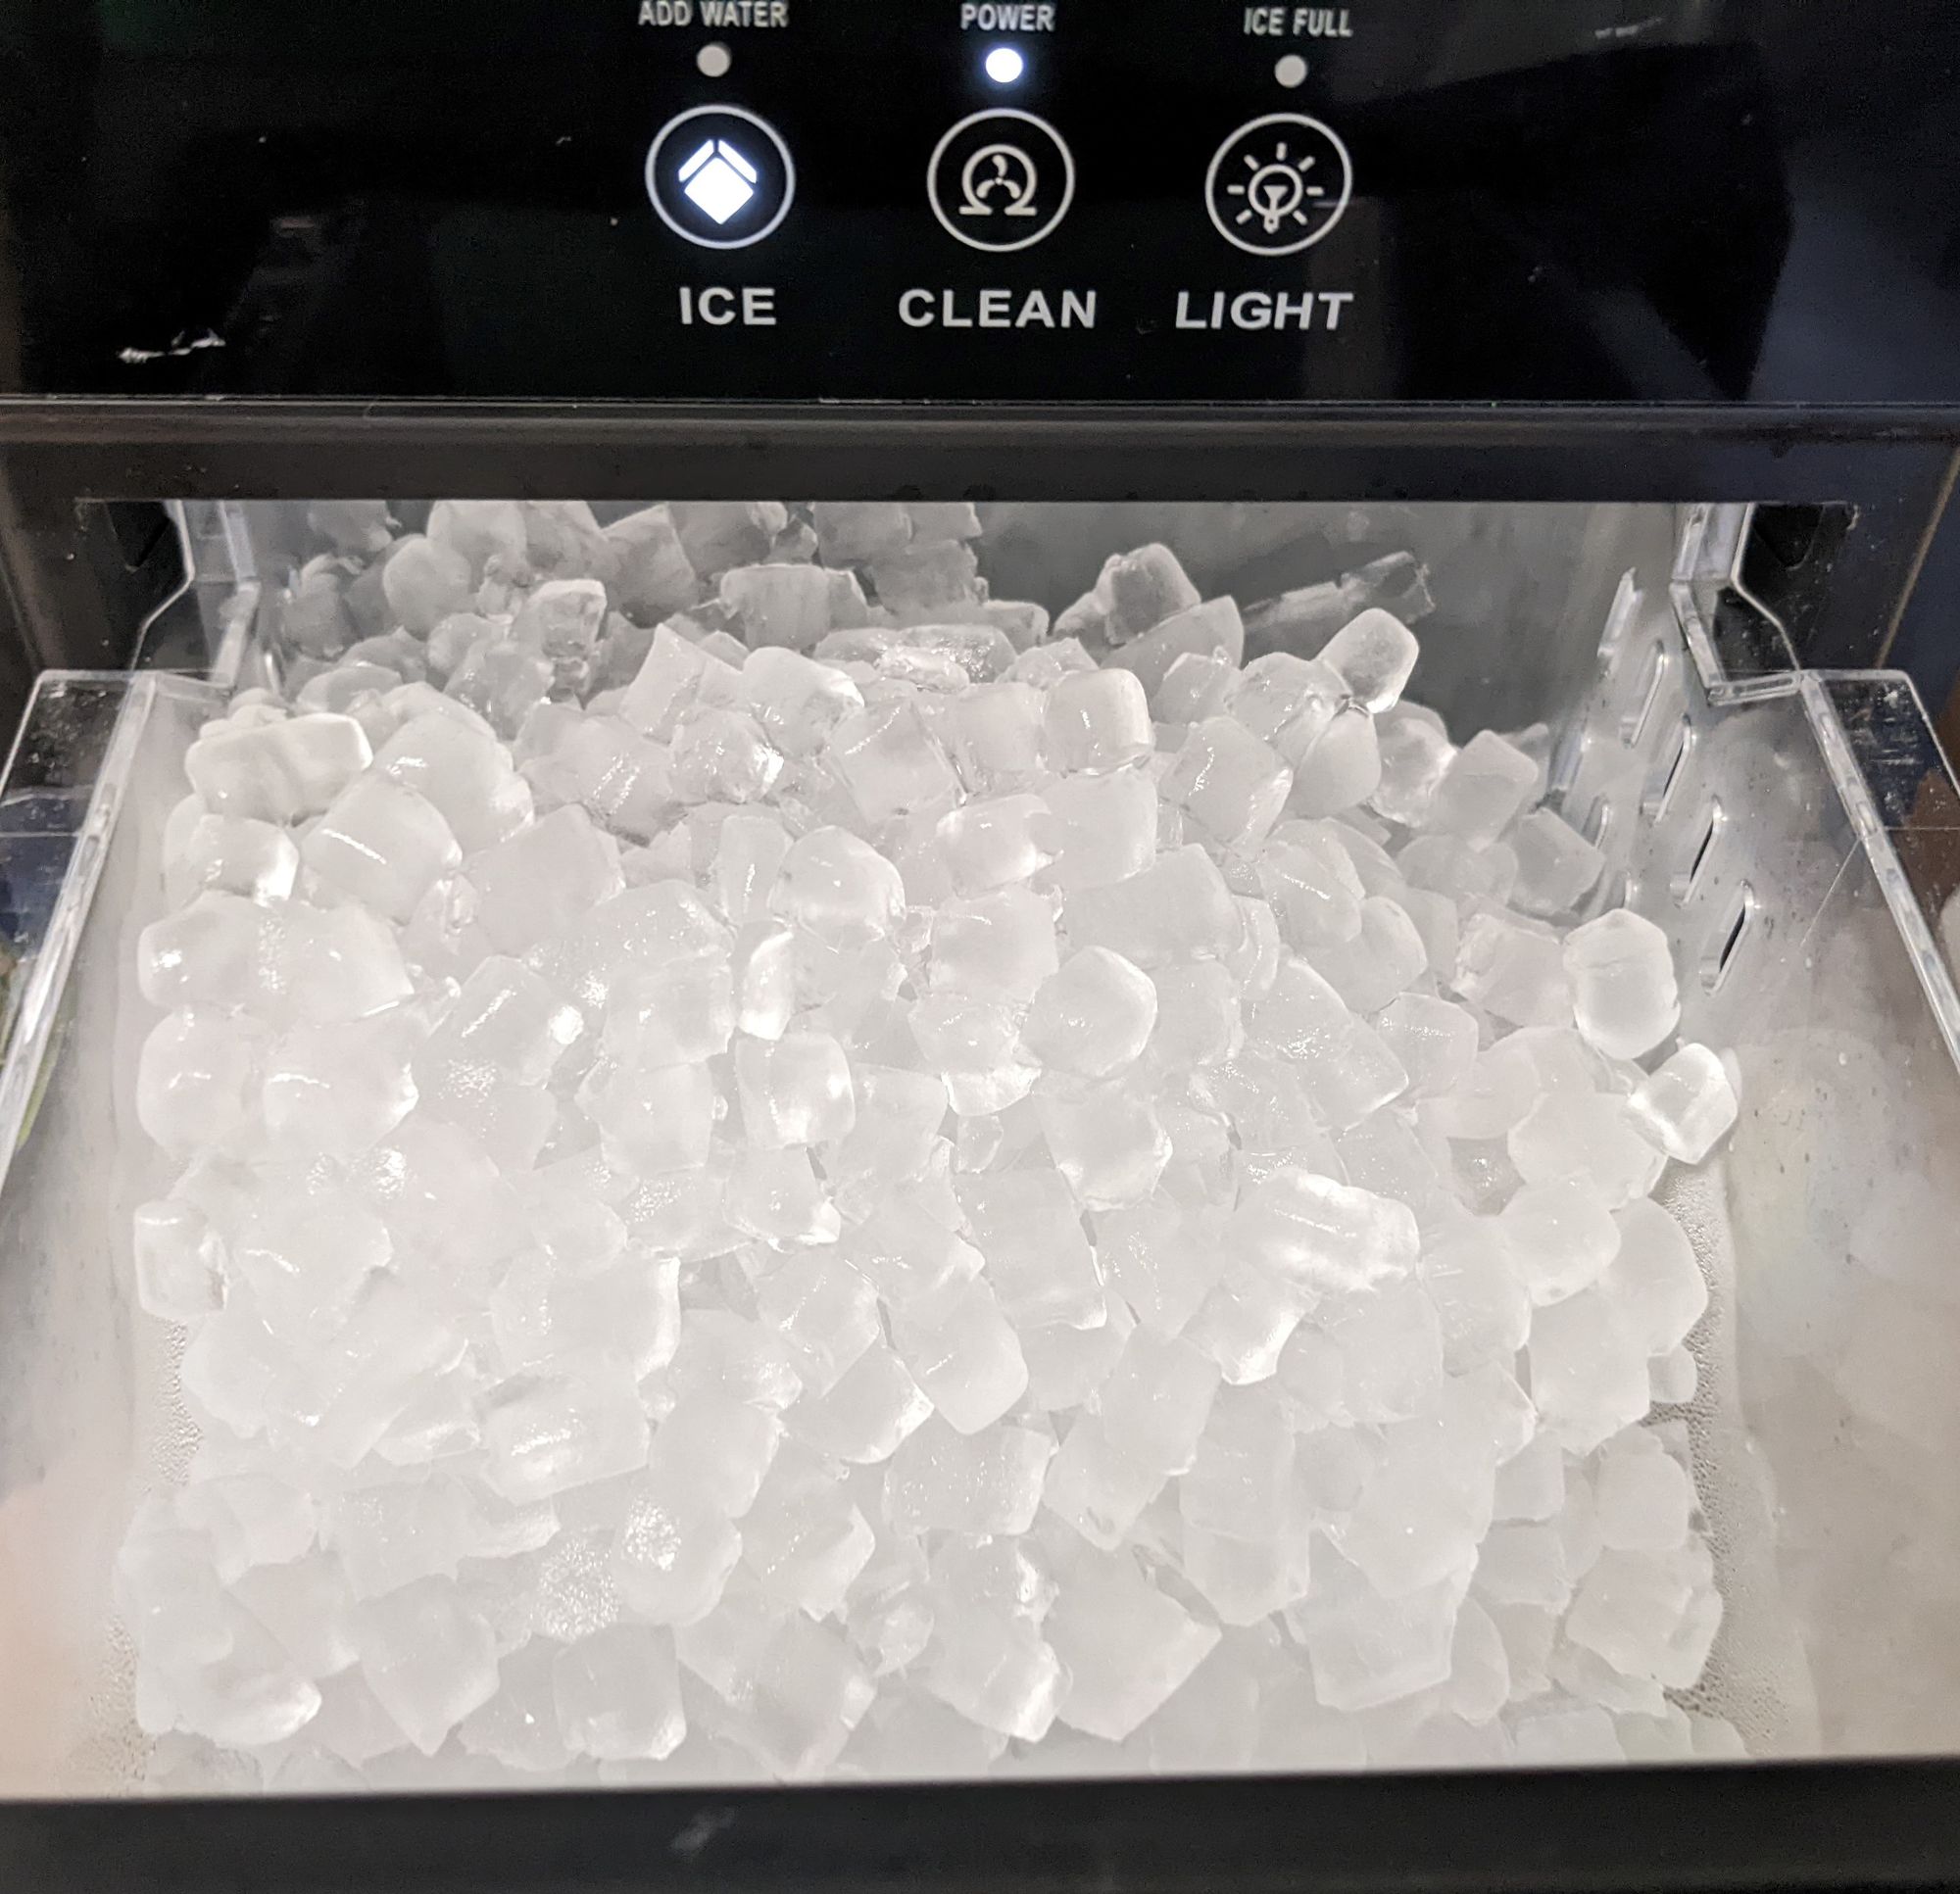 NEW Insignia Ice Maker Kit